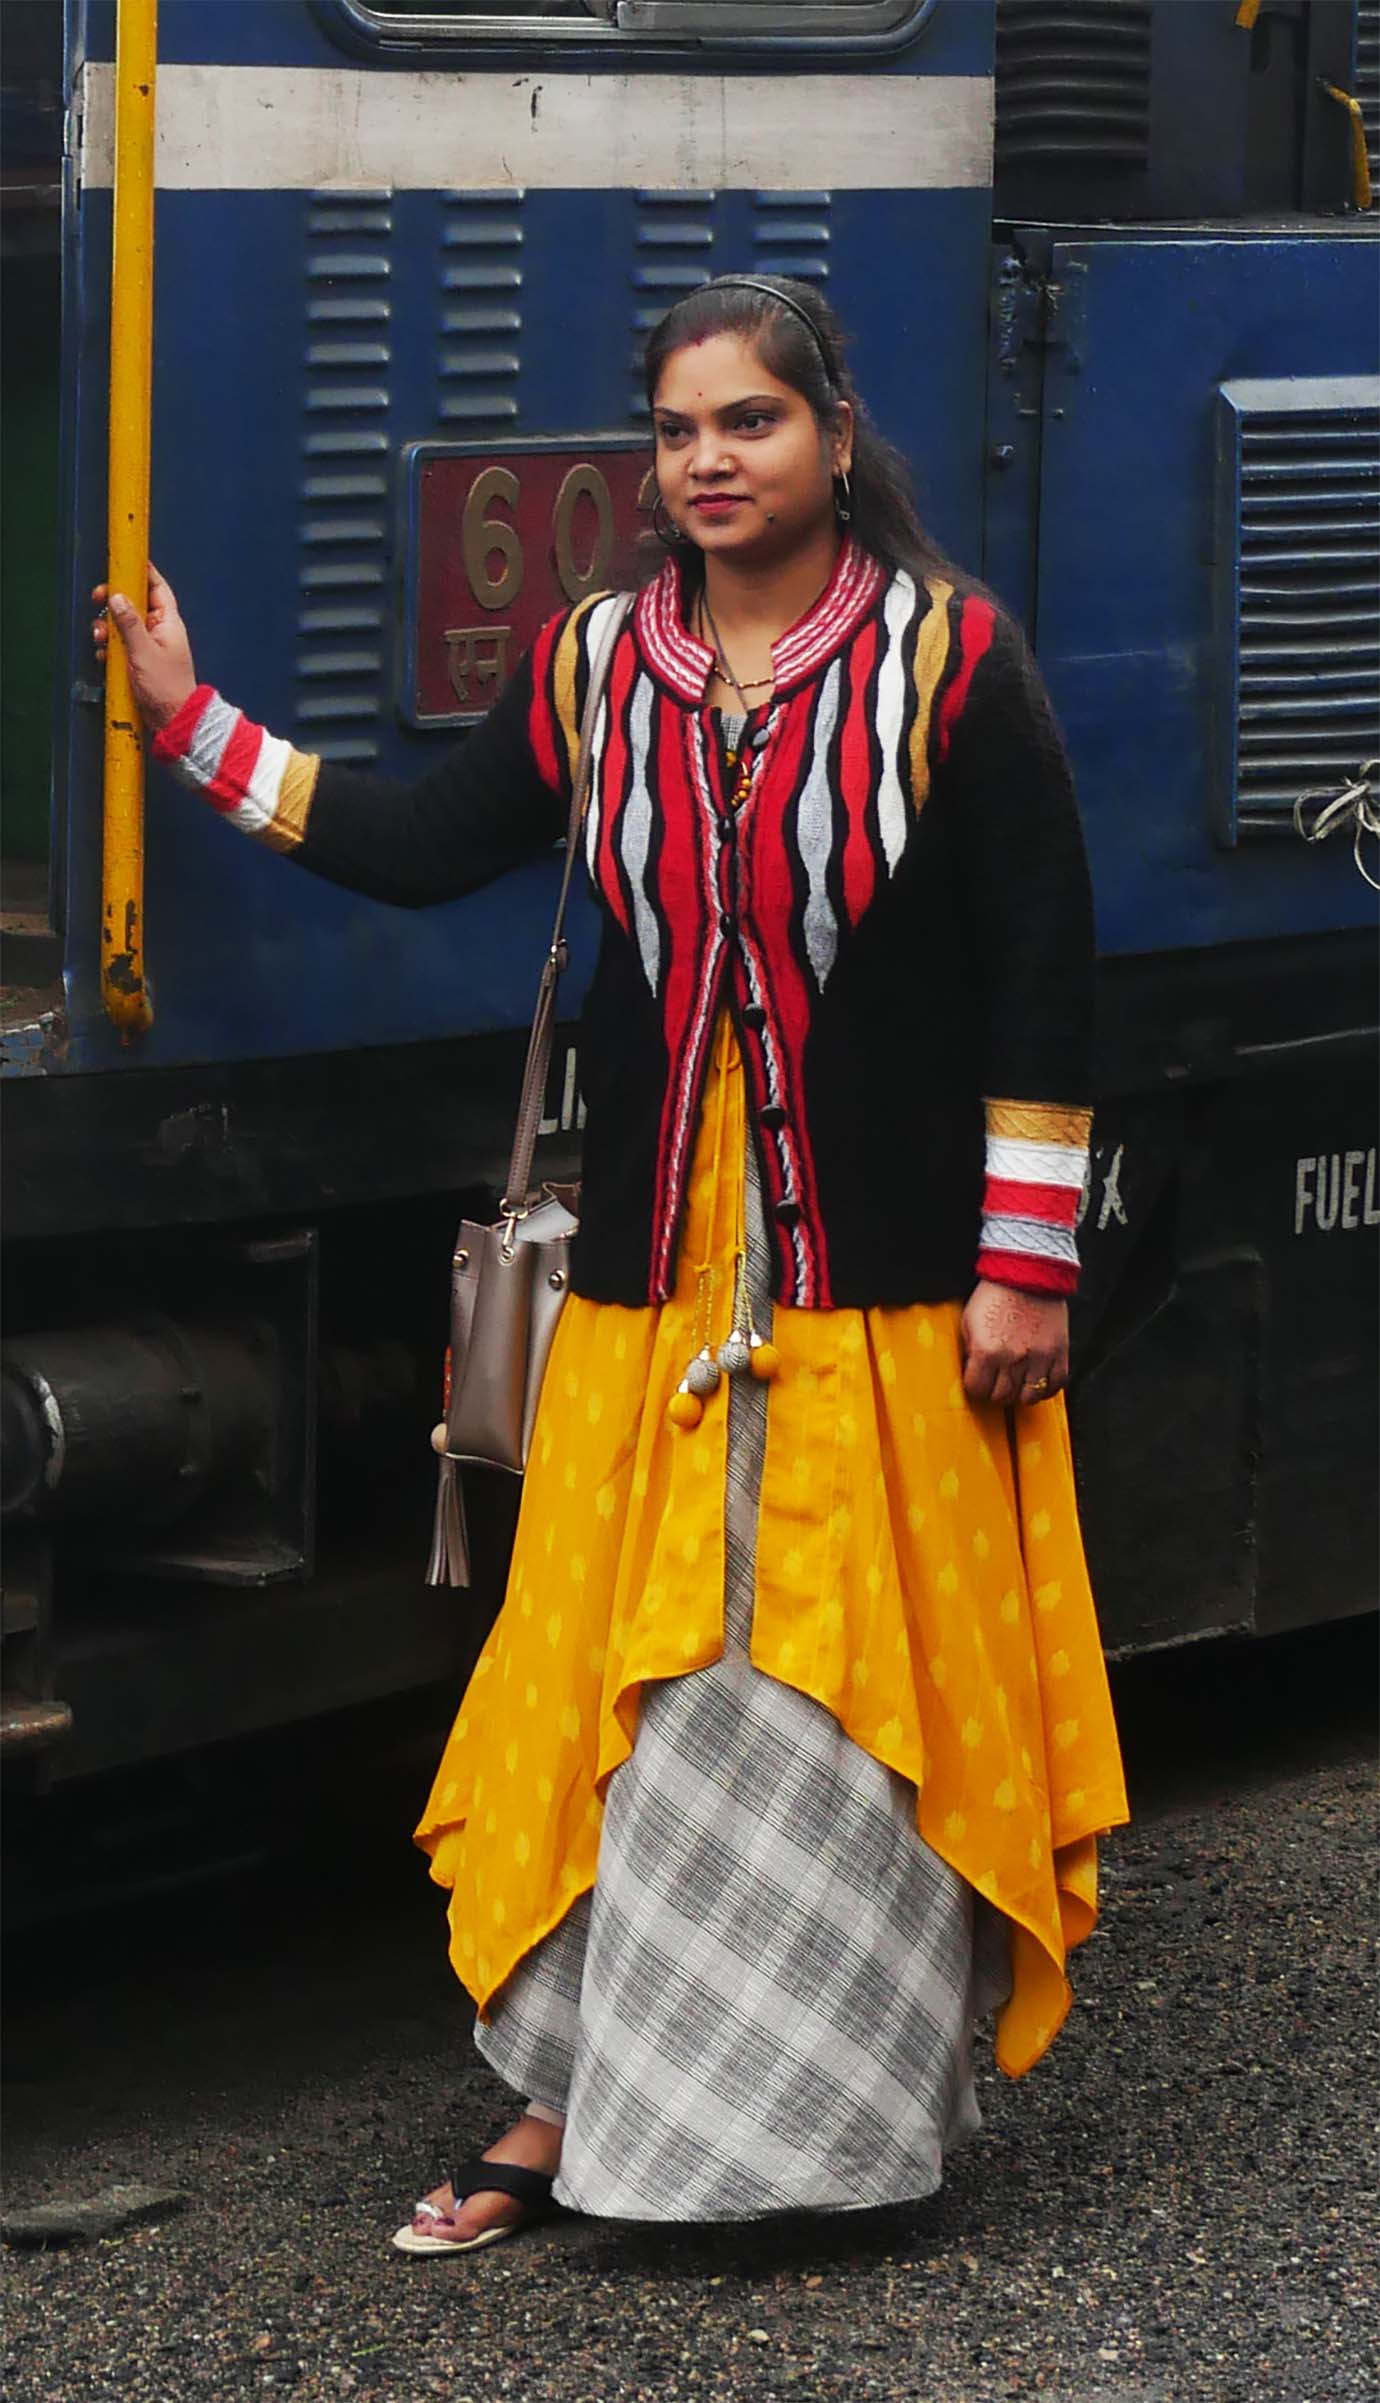 ride-darjeeling-railway-india27